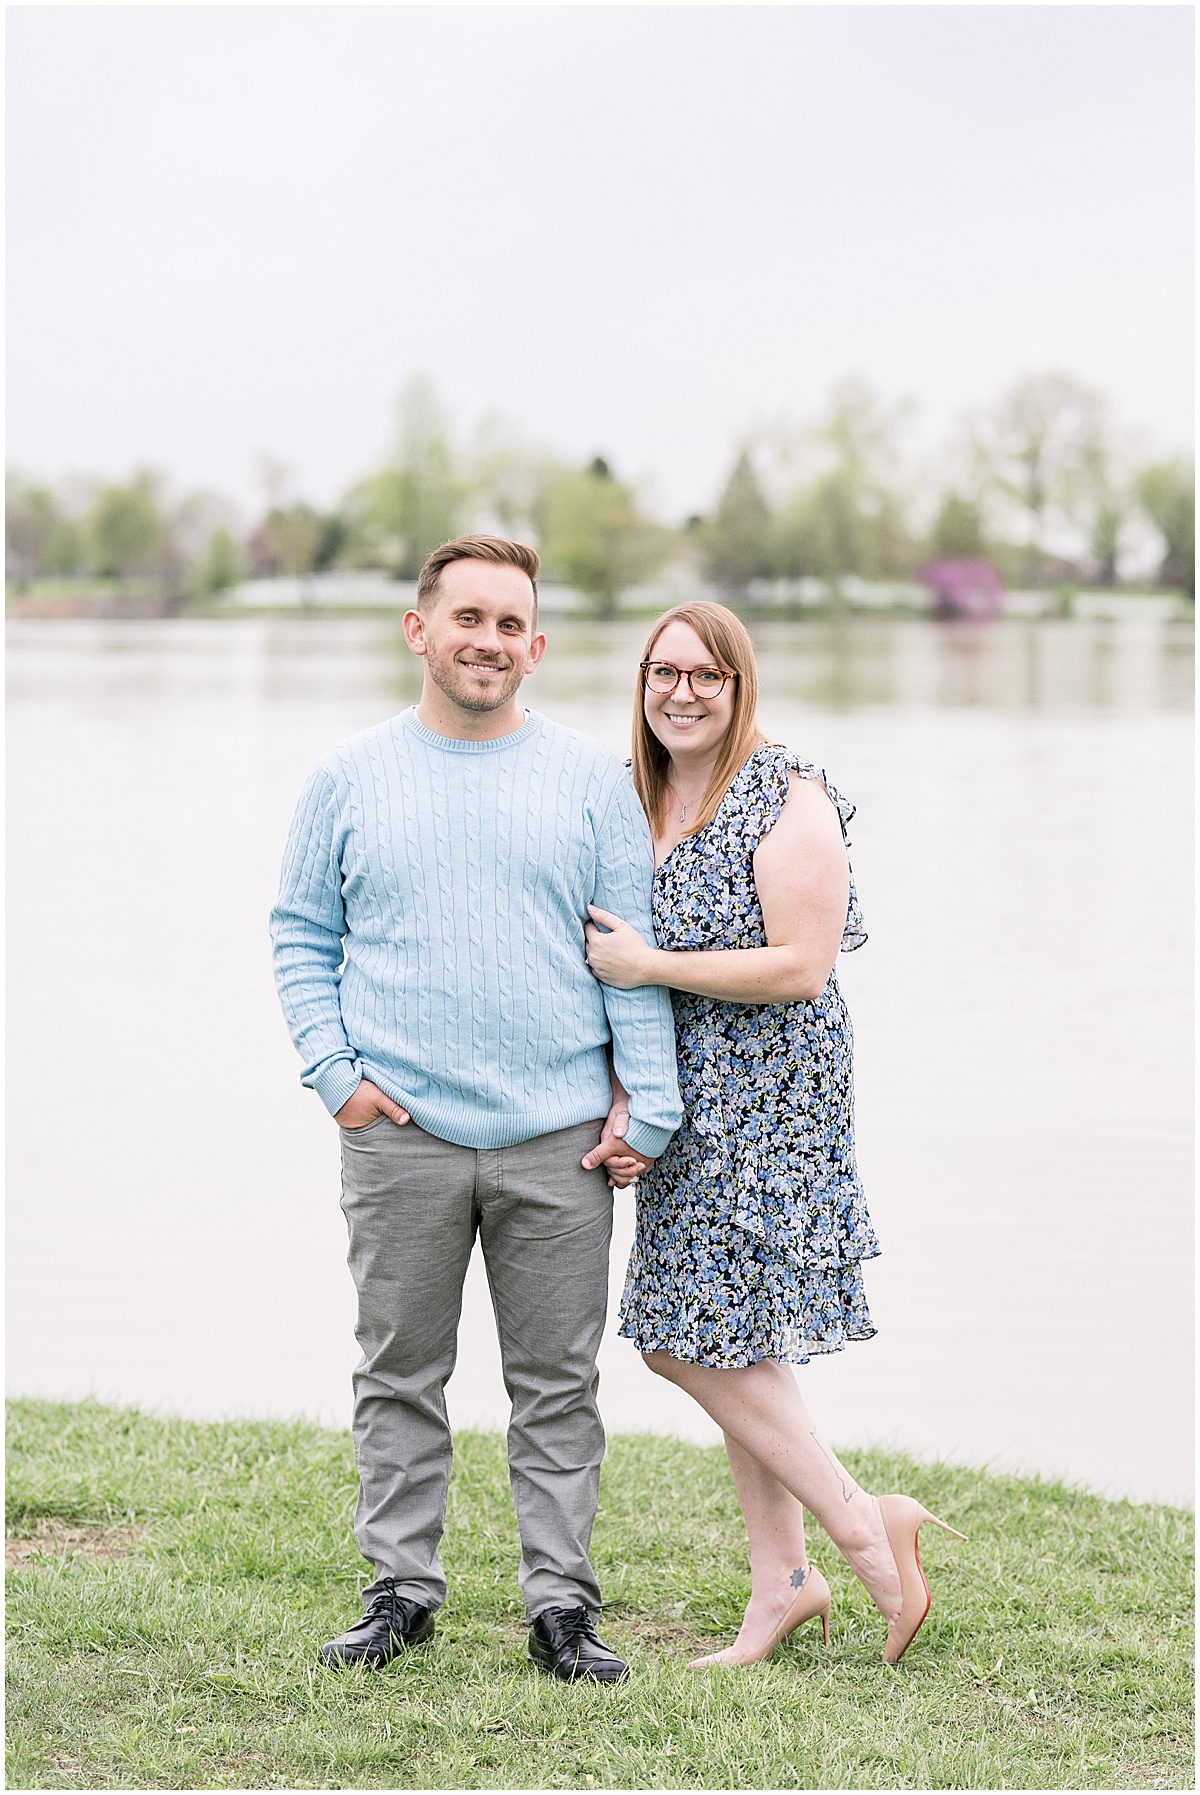 Engaged couple at Spring engagement photos at Wildcat Creek Reservoir Park in Kokomo, Indiana